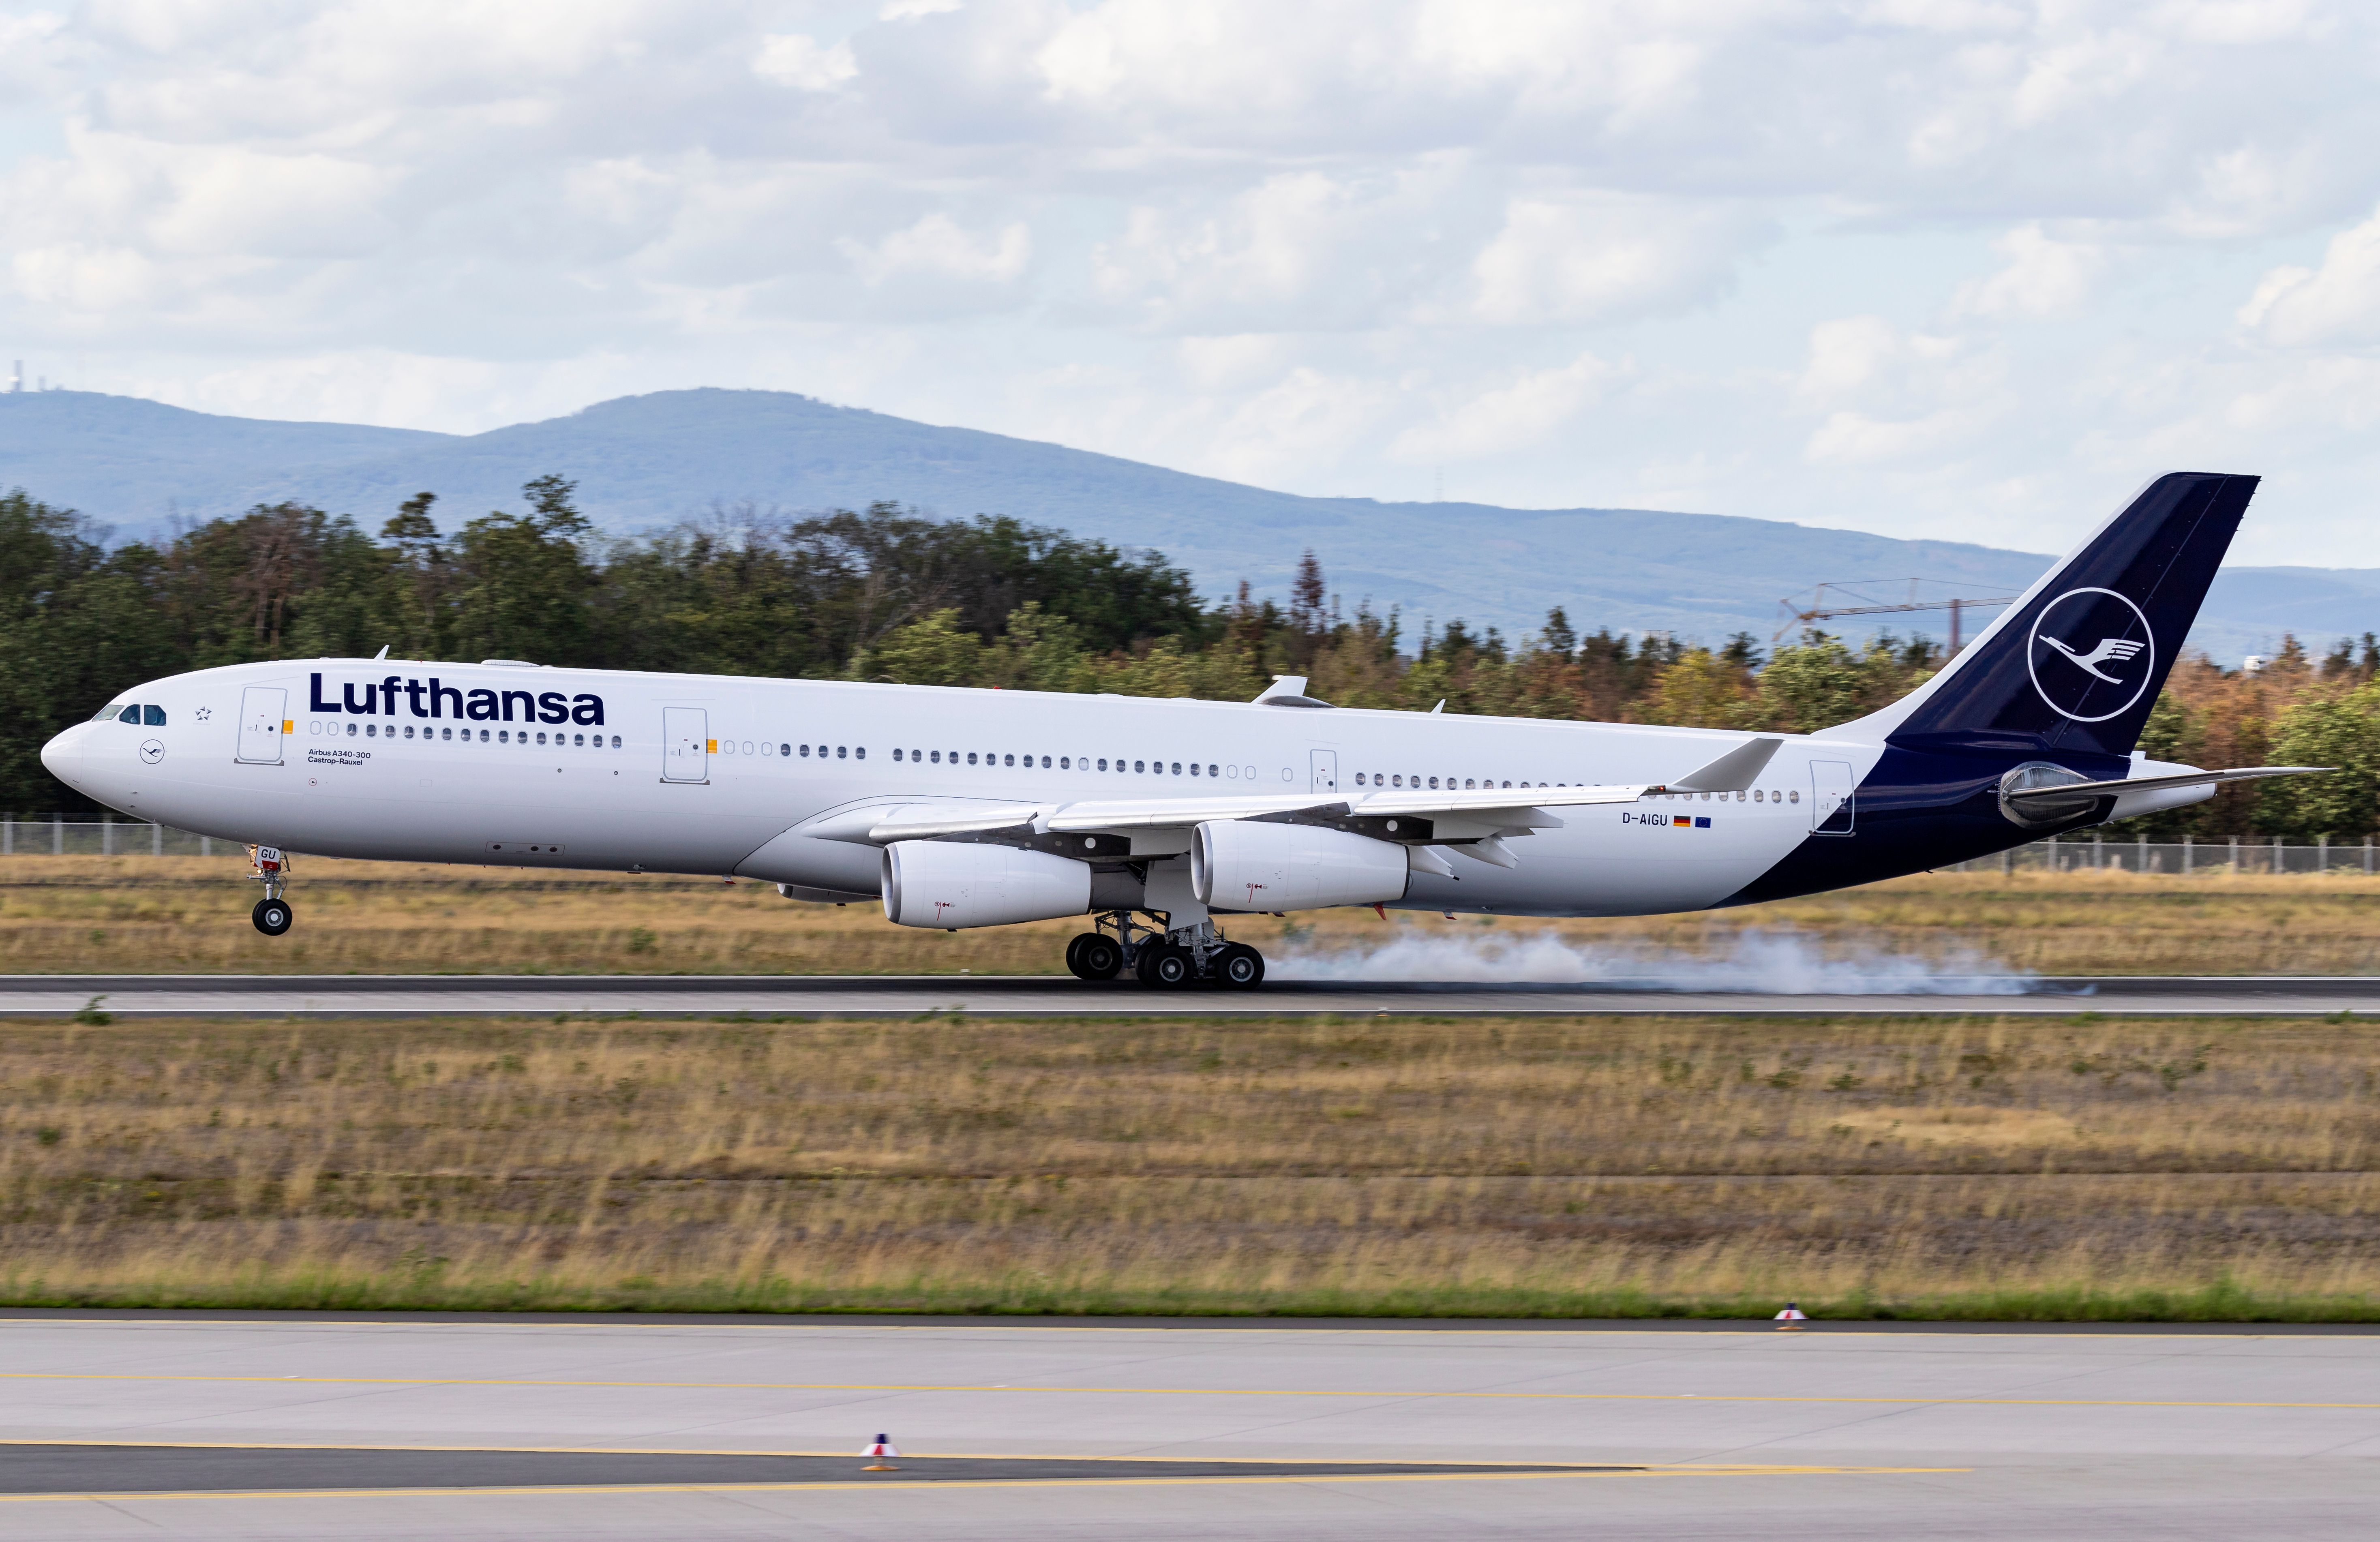 Lufthansa Airbus A340-300 landing on a runway.